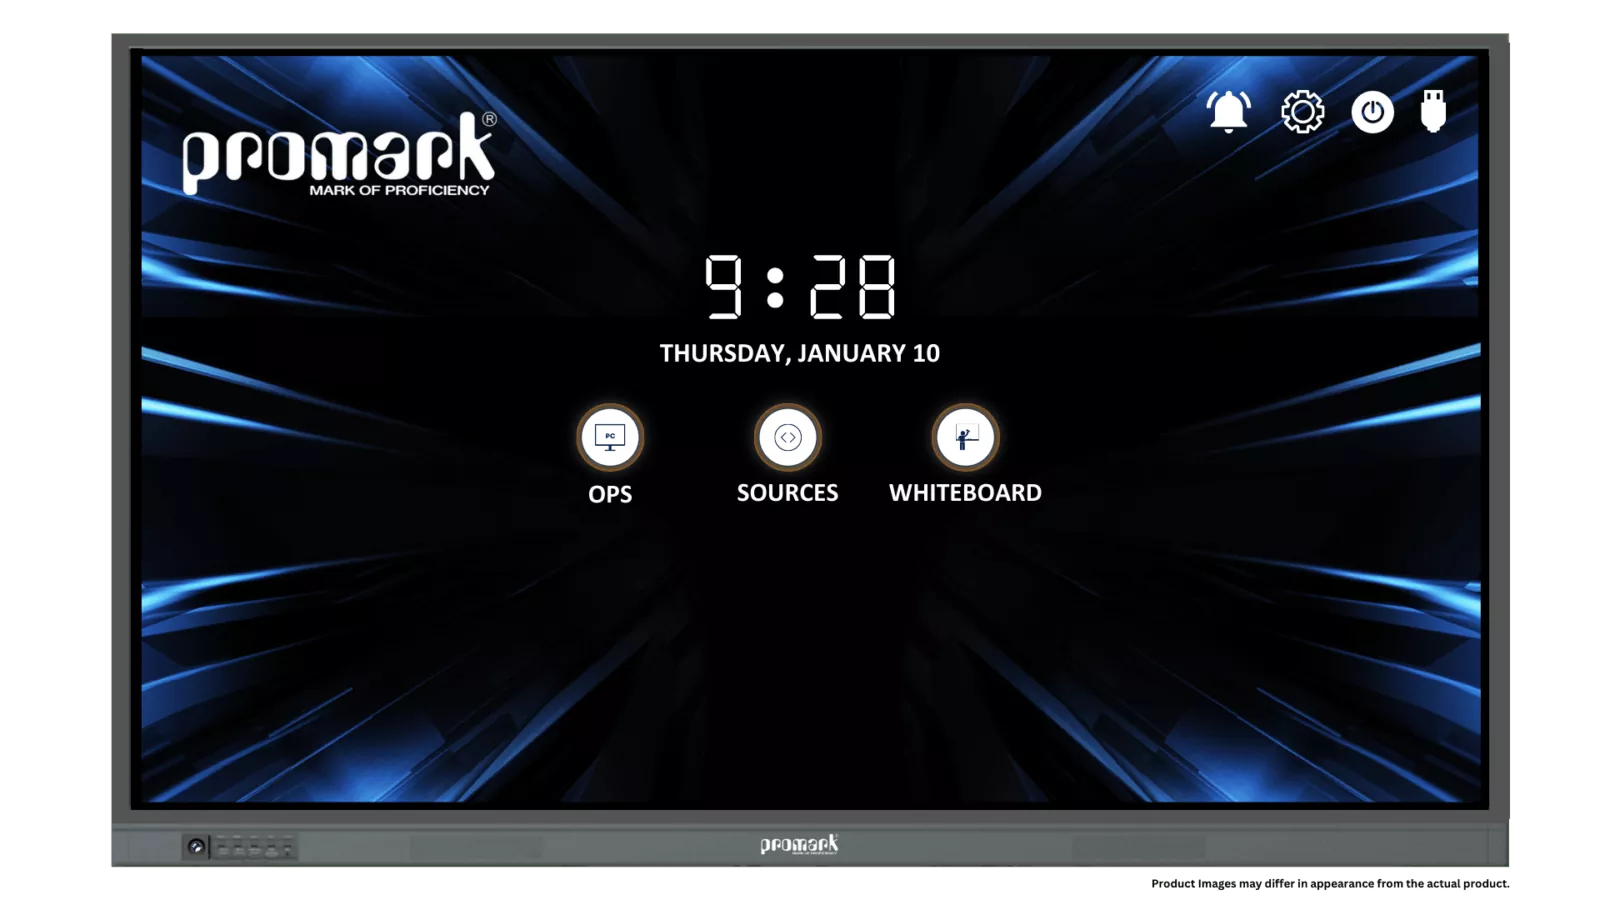 Promark's Interactive flat panel Display